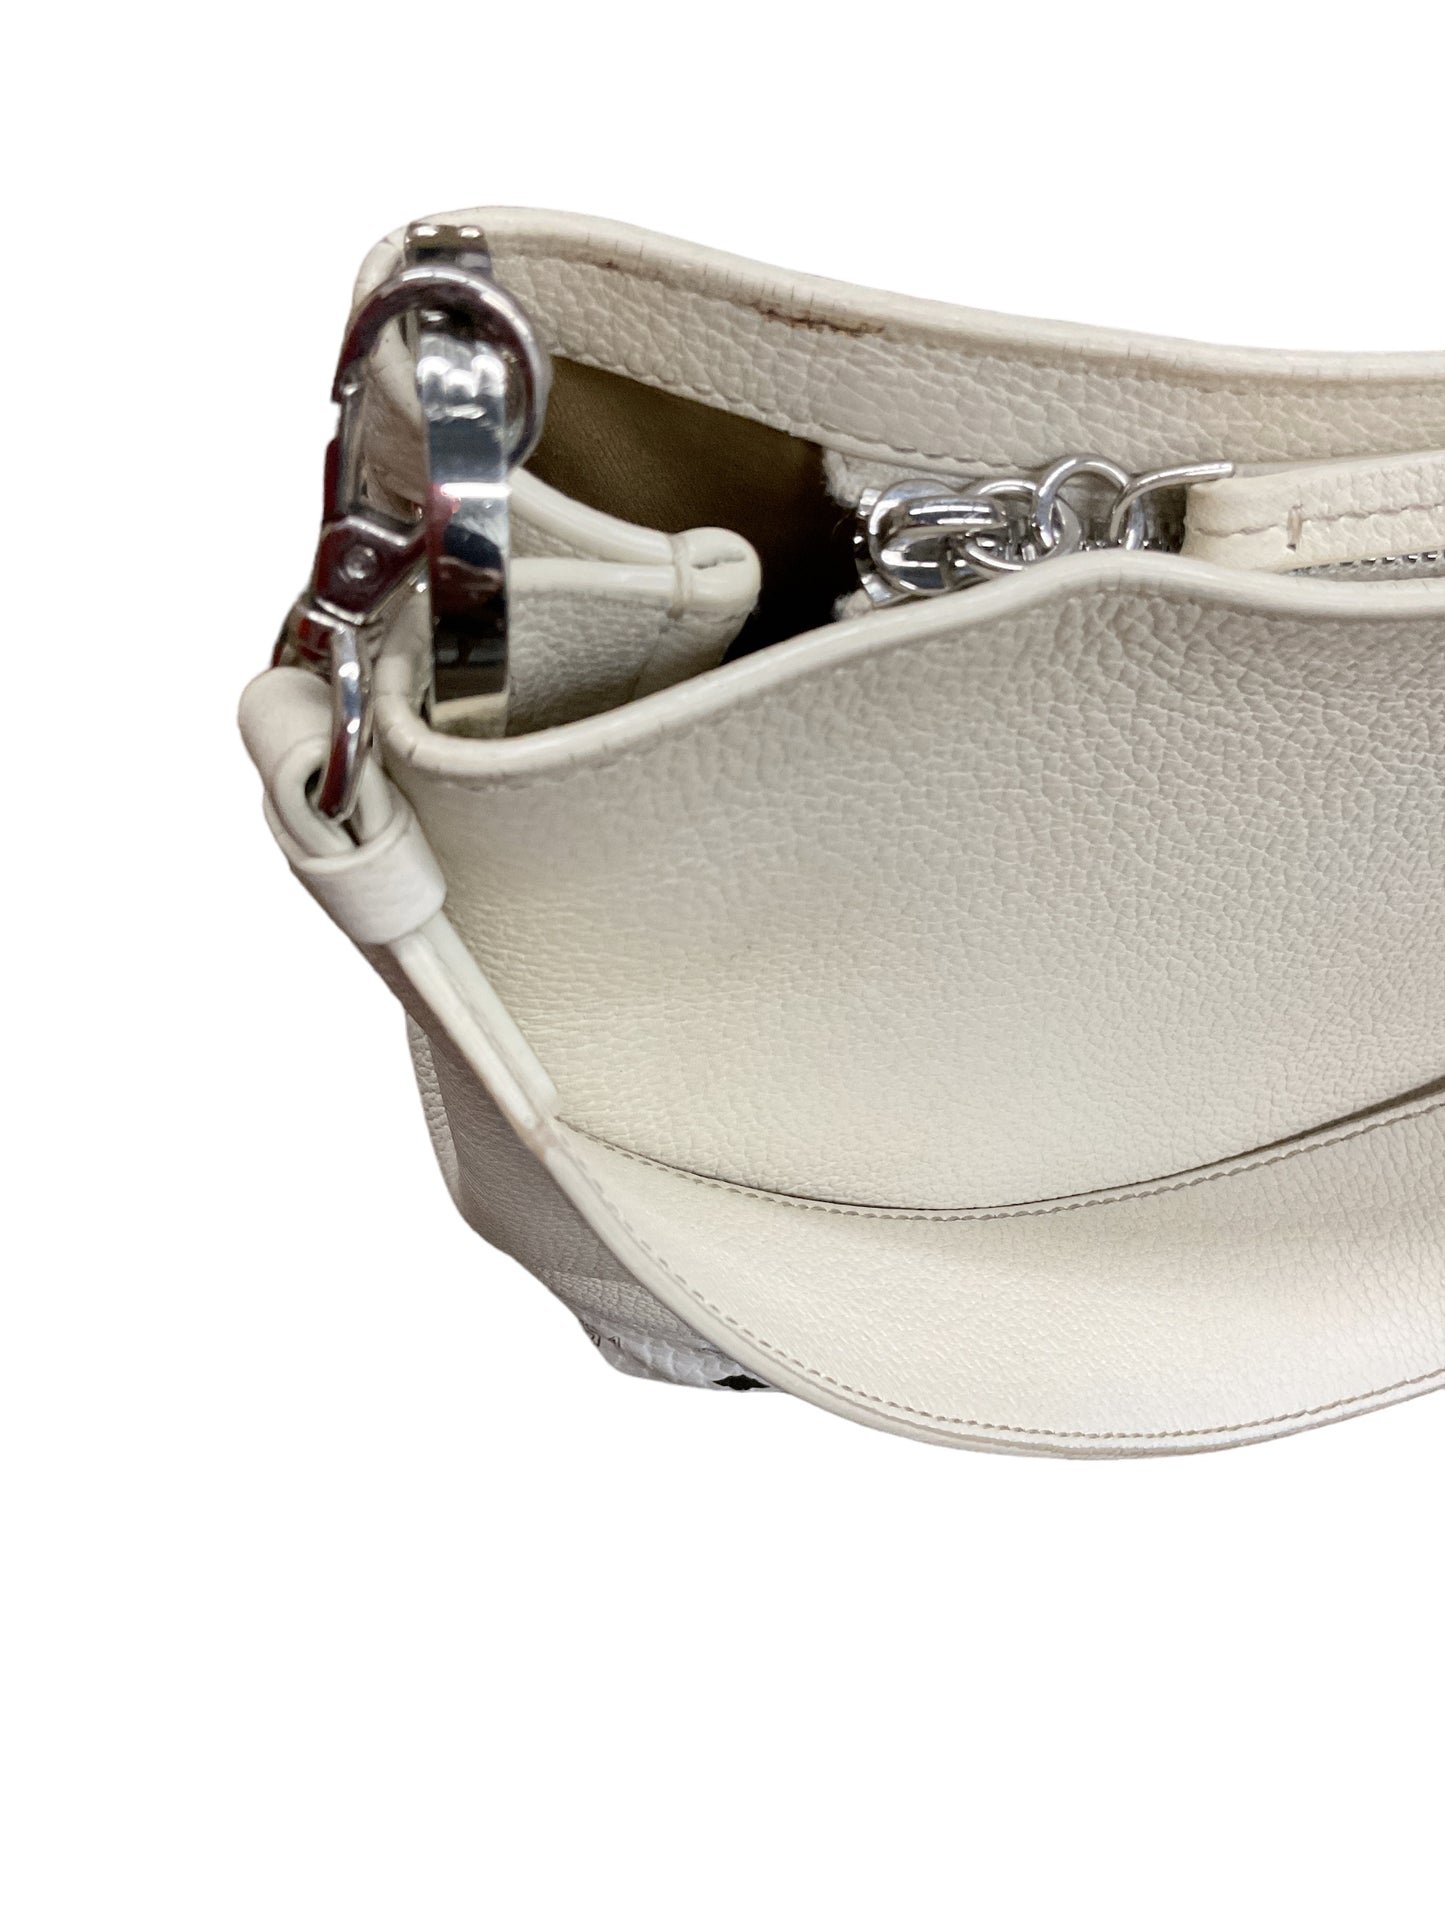 Handbag Luxury Designer By Mcm  Size: Medium